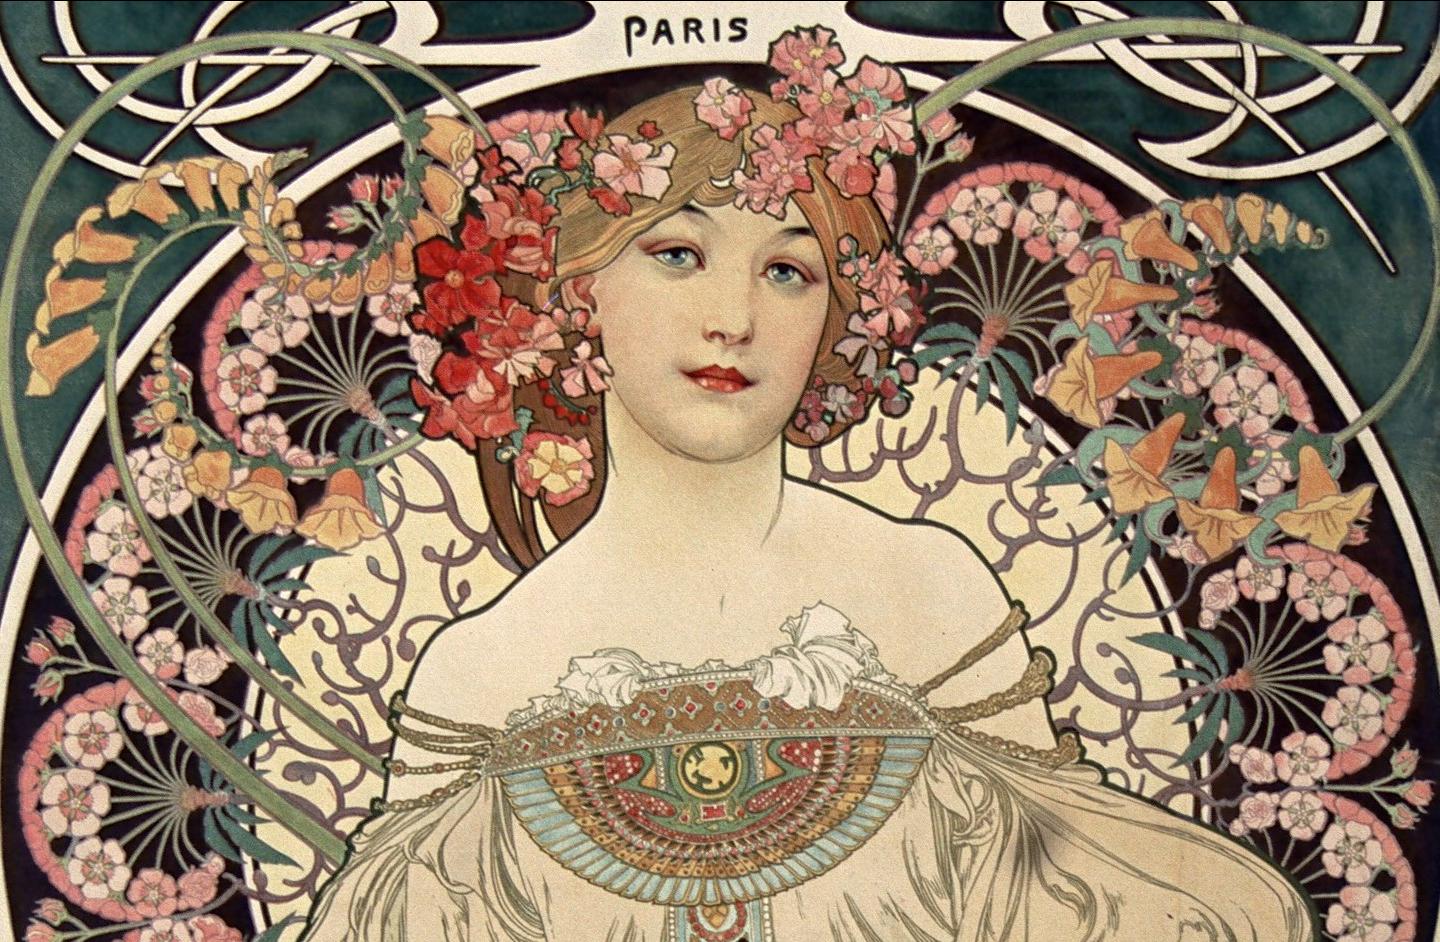 II. Understanding the Art Nouveau Style